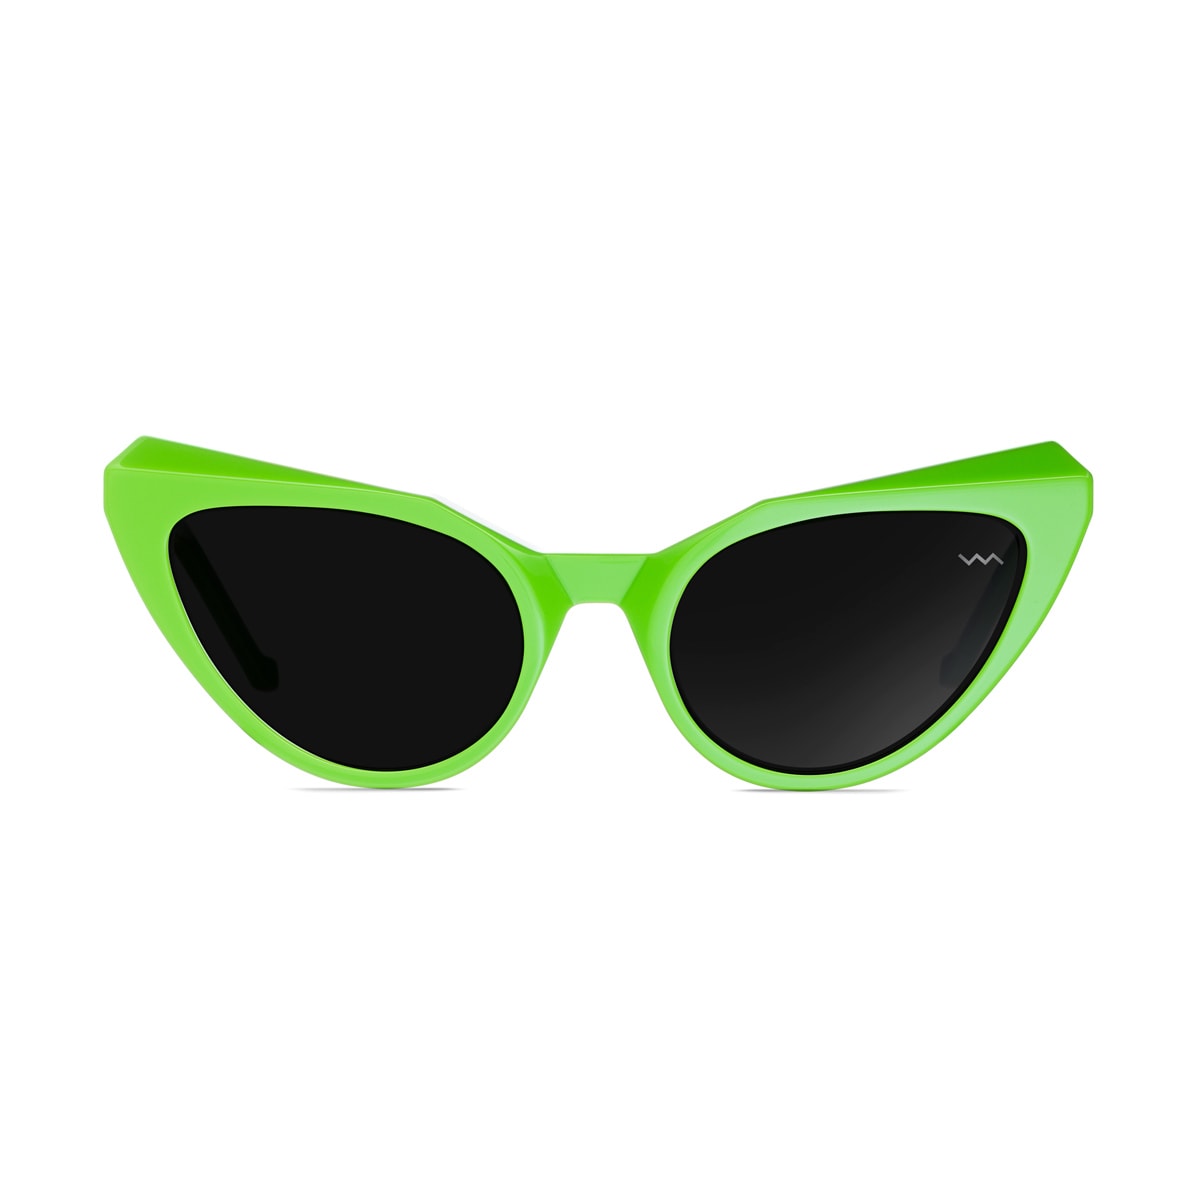 Bl0028 Black Label Acid Green Sunglasses